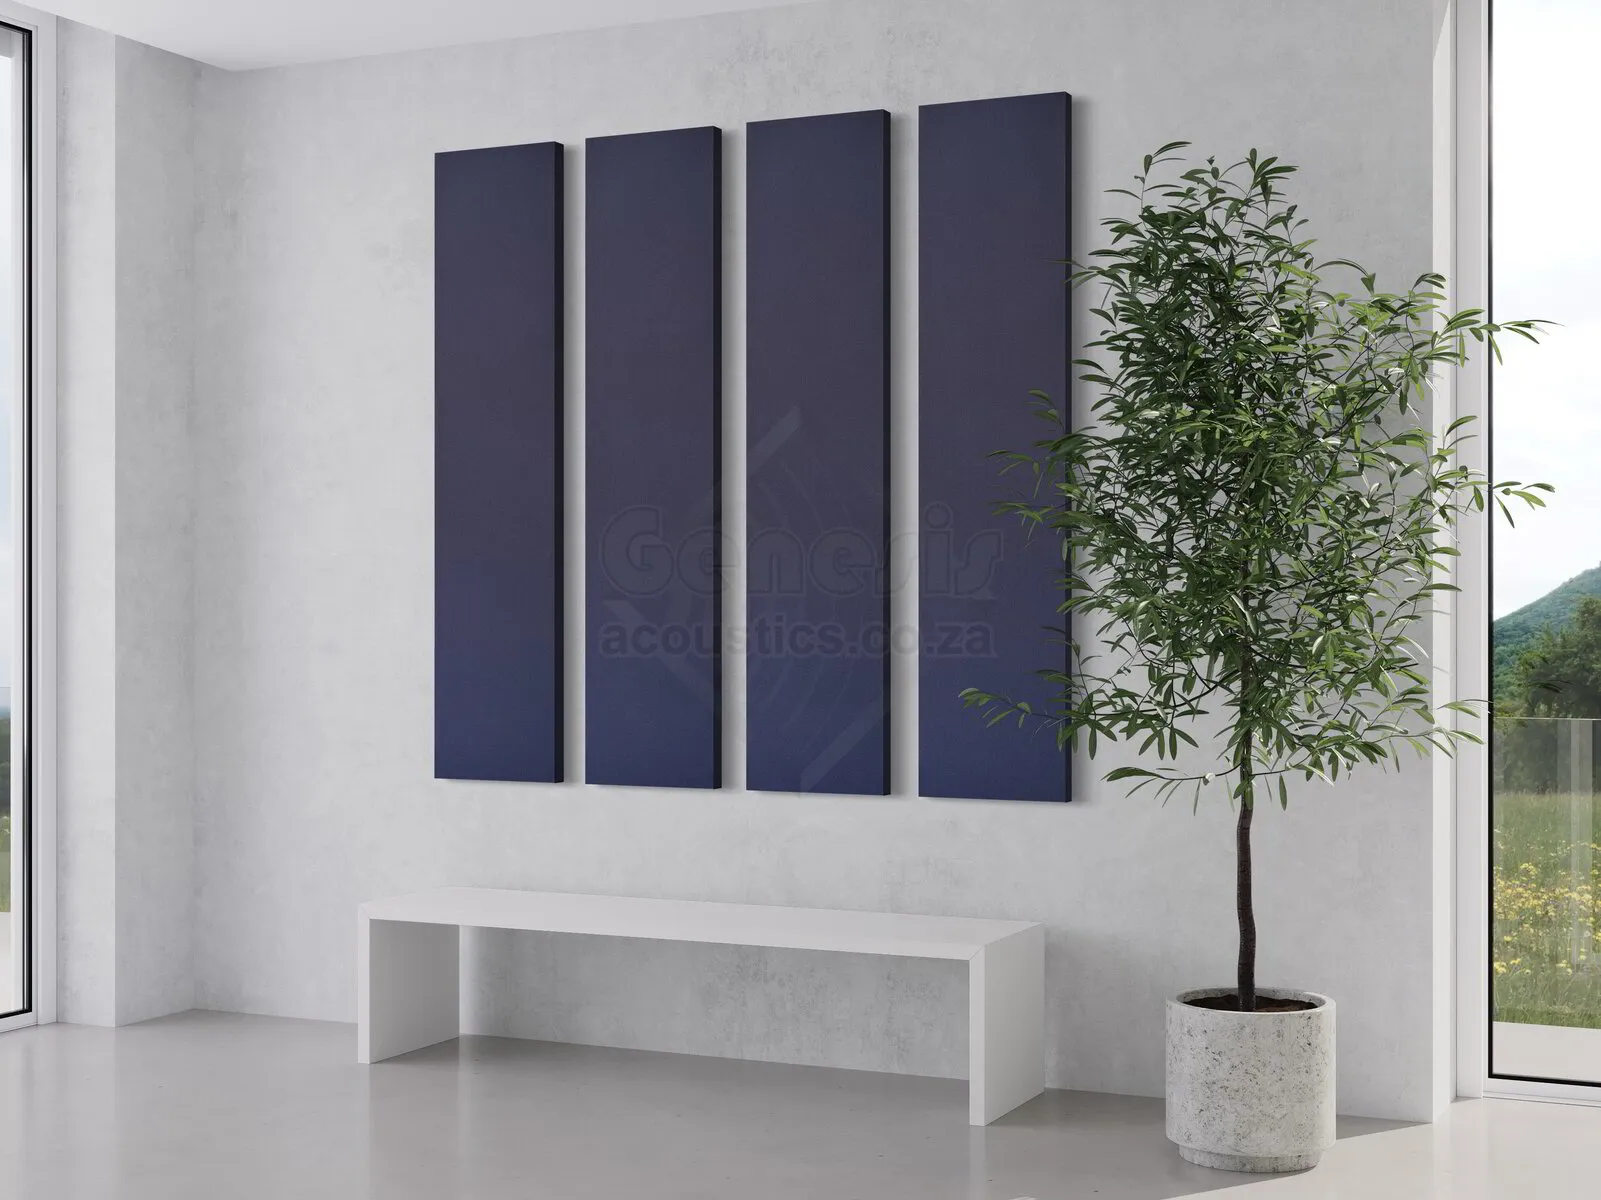 S5 Pro Acoustic Wall Panels - 180cm x 40cm Set of 4 - Marine